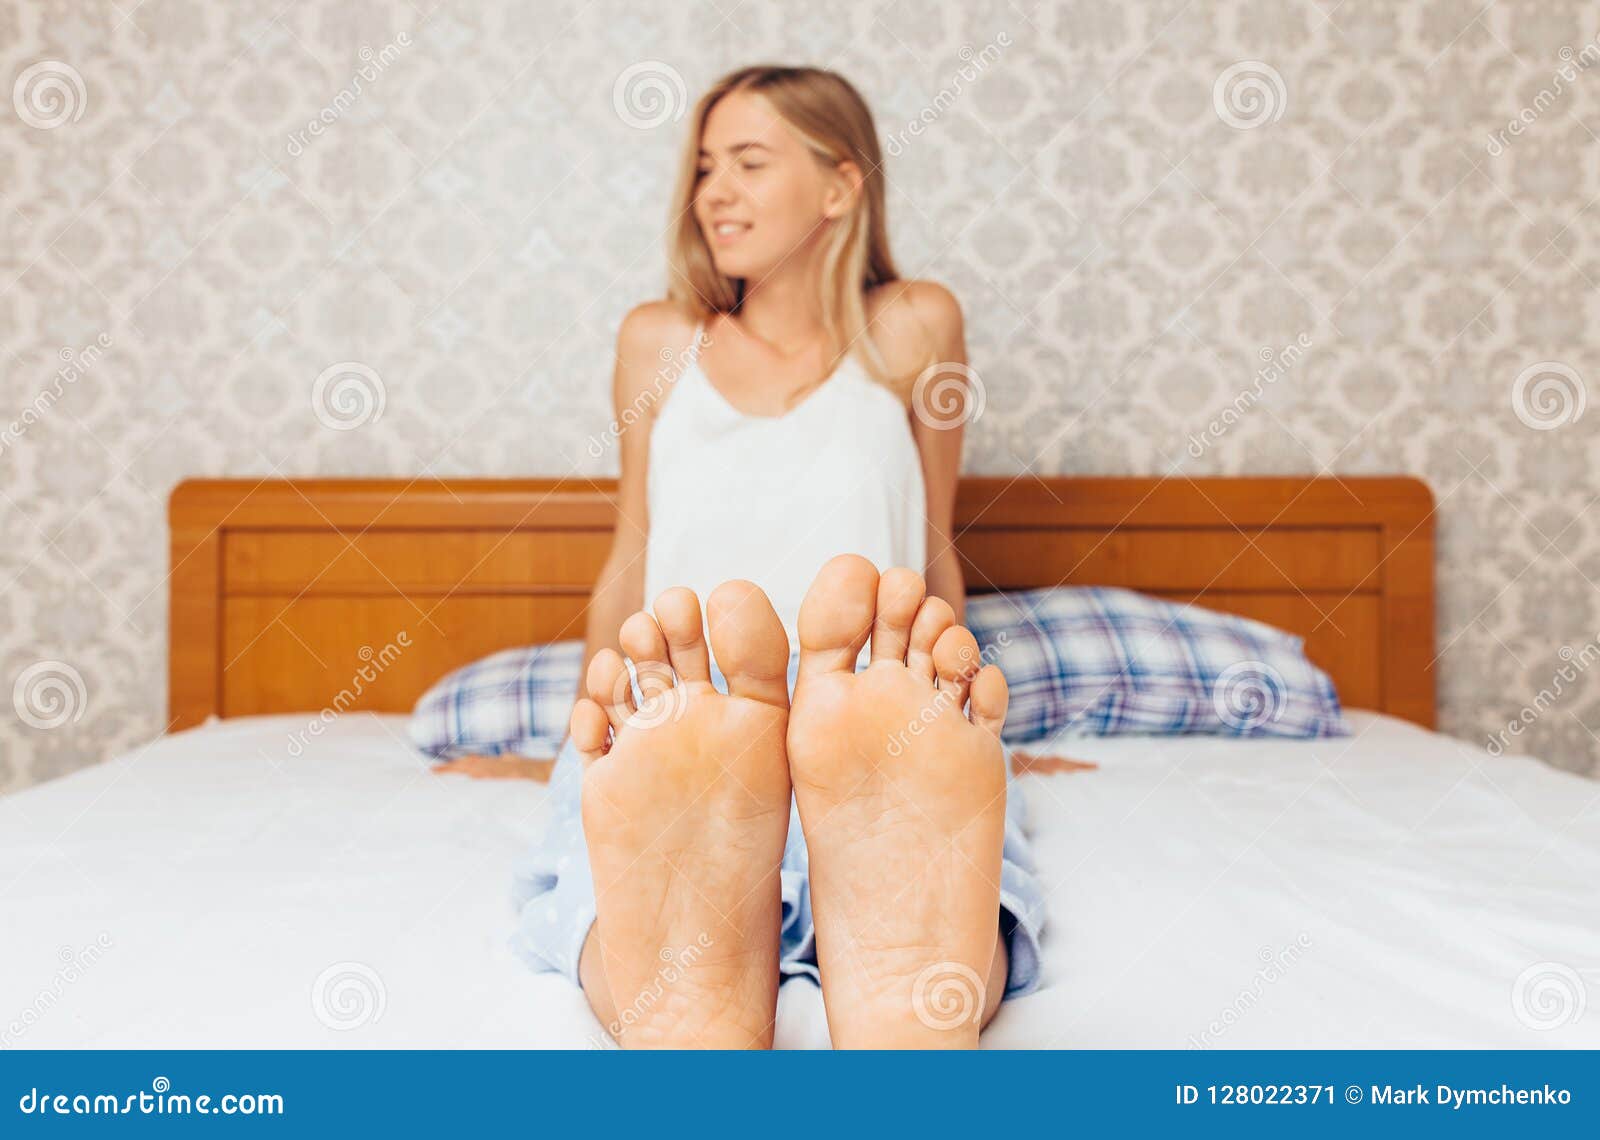 girls feet in bed xxx pics